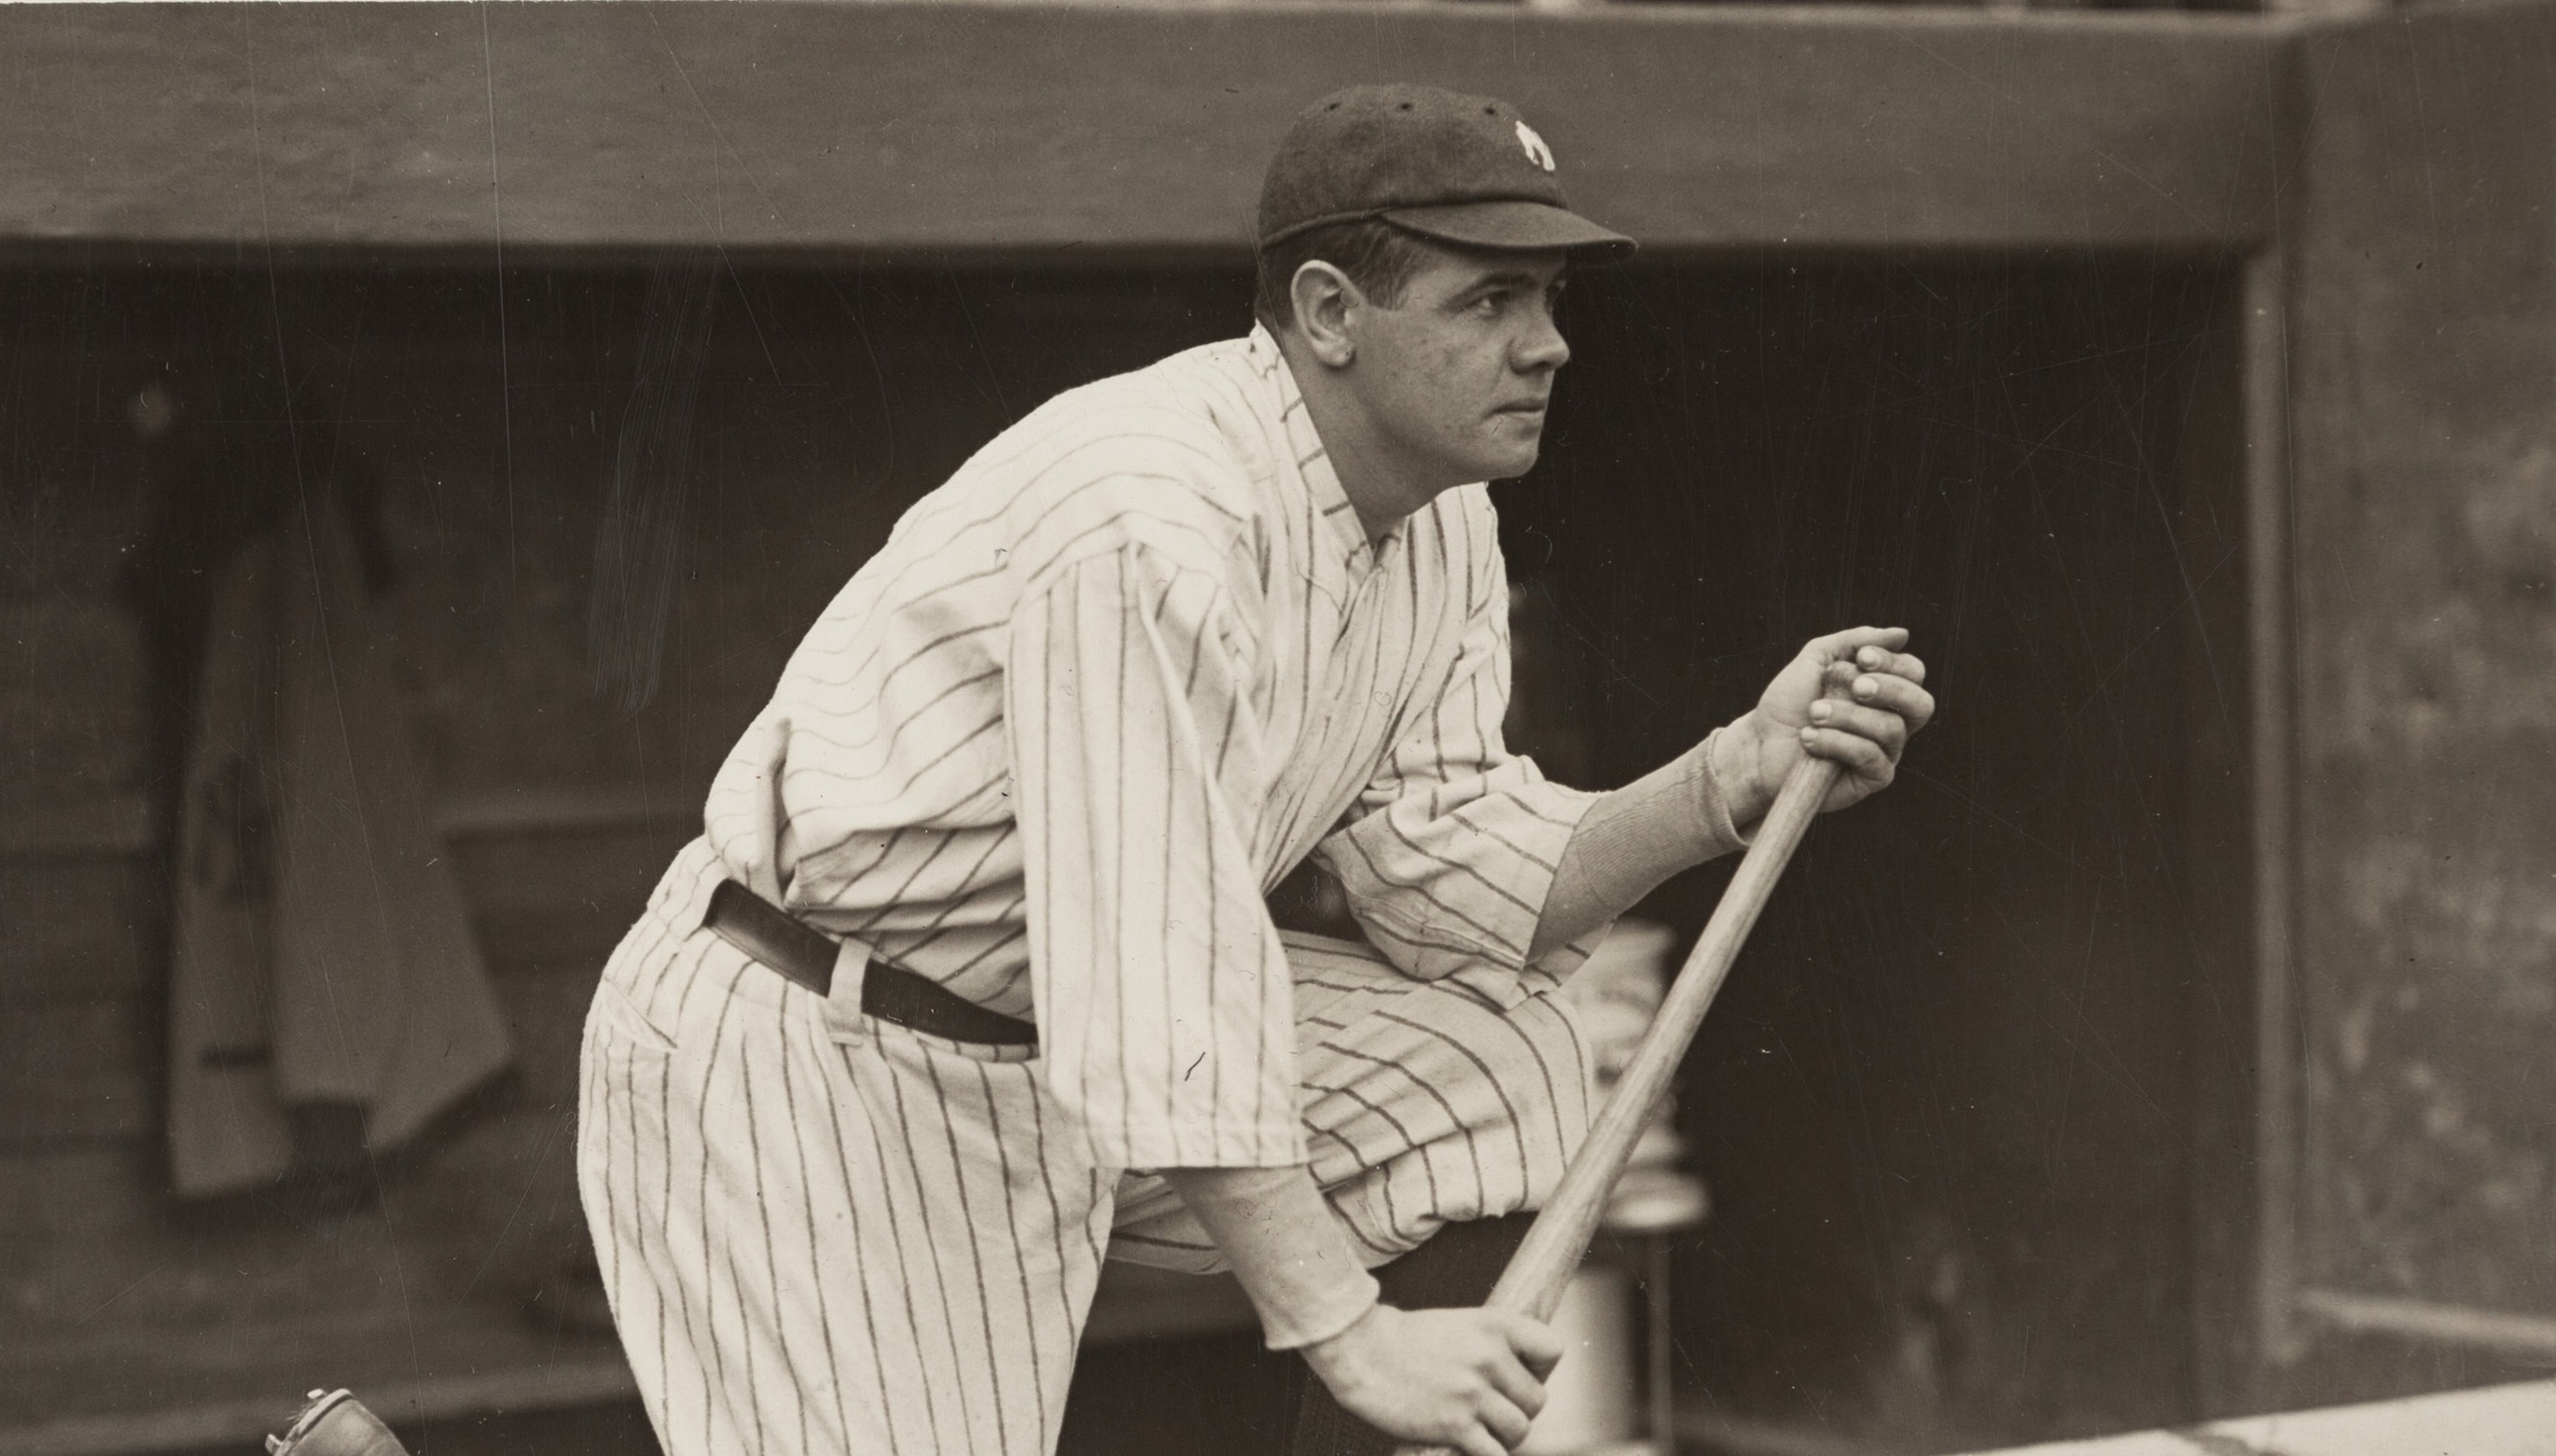 April 18, 1929: Babe Ruth celebrates 'honeymoon' with a home run